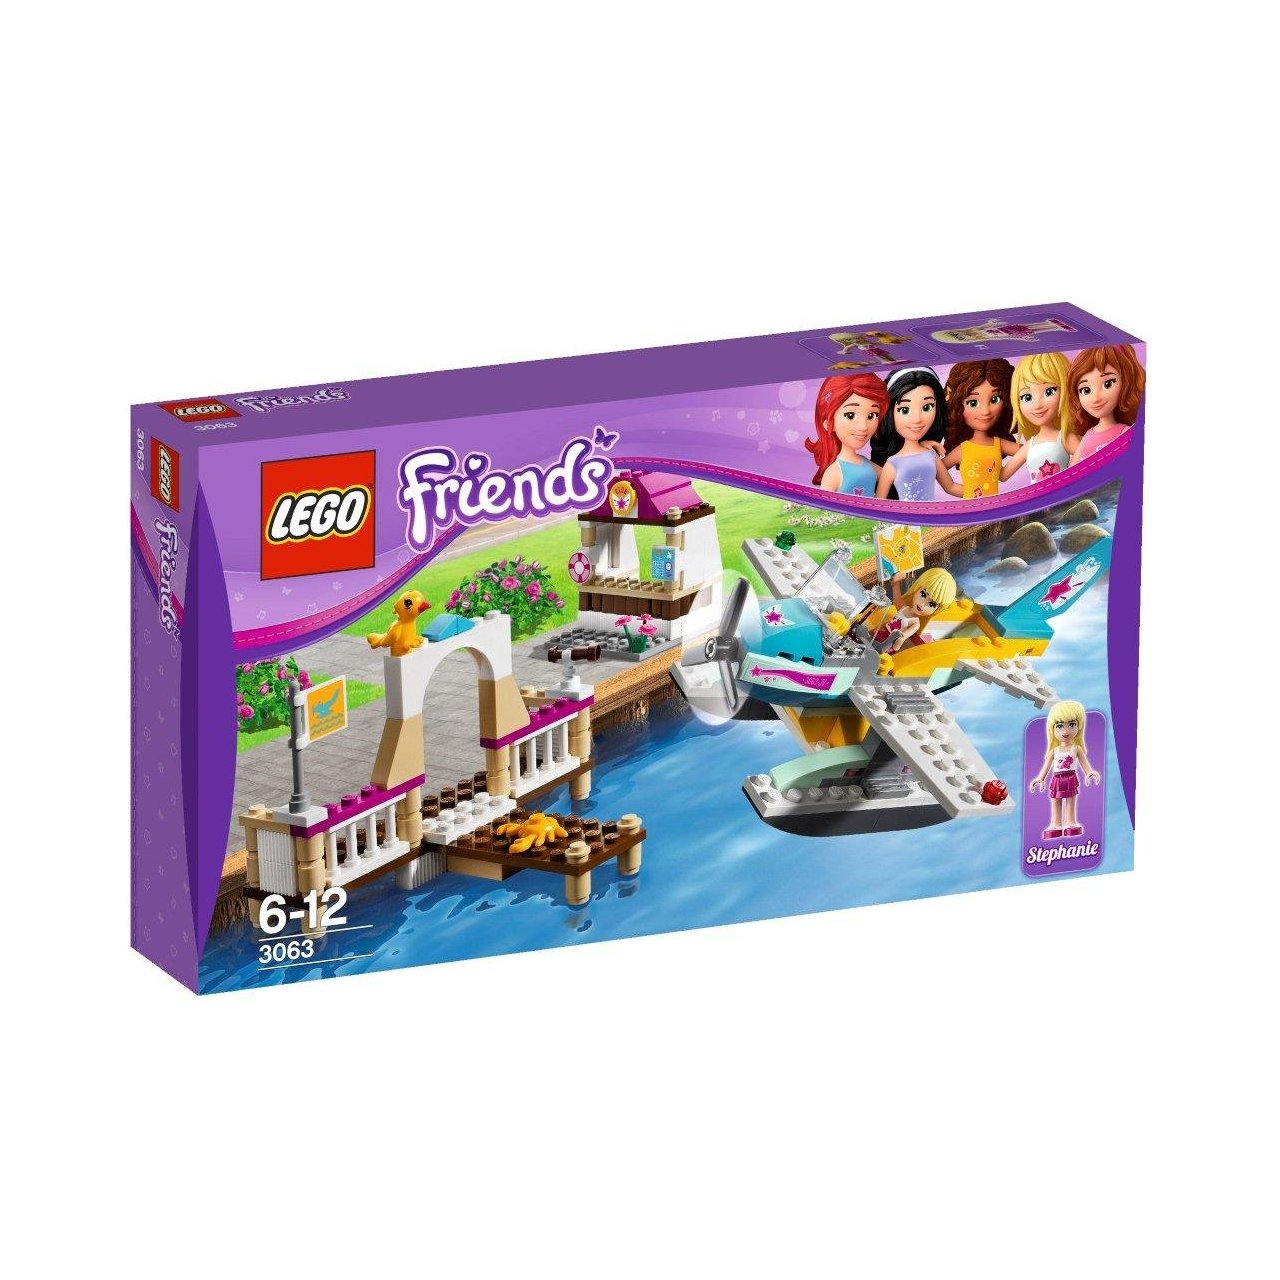 LEGO Friends Inspire Girls Globally: Friends sets 2012